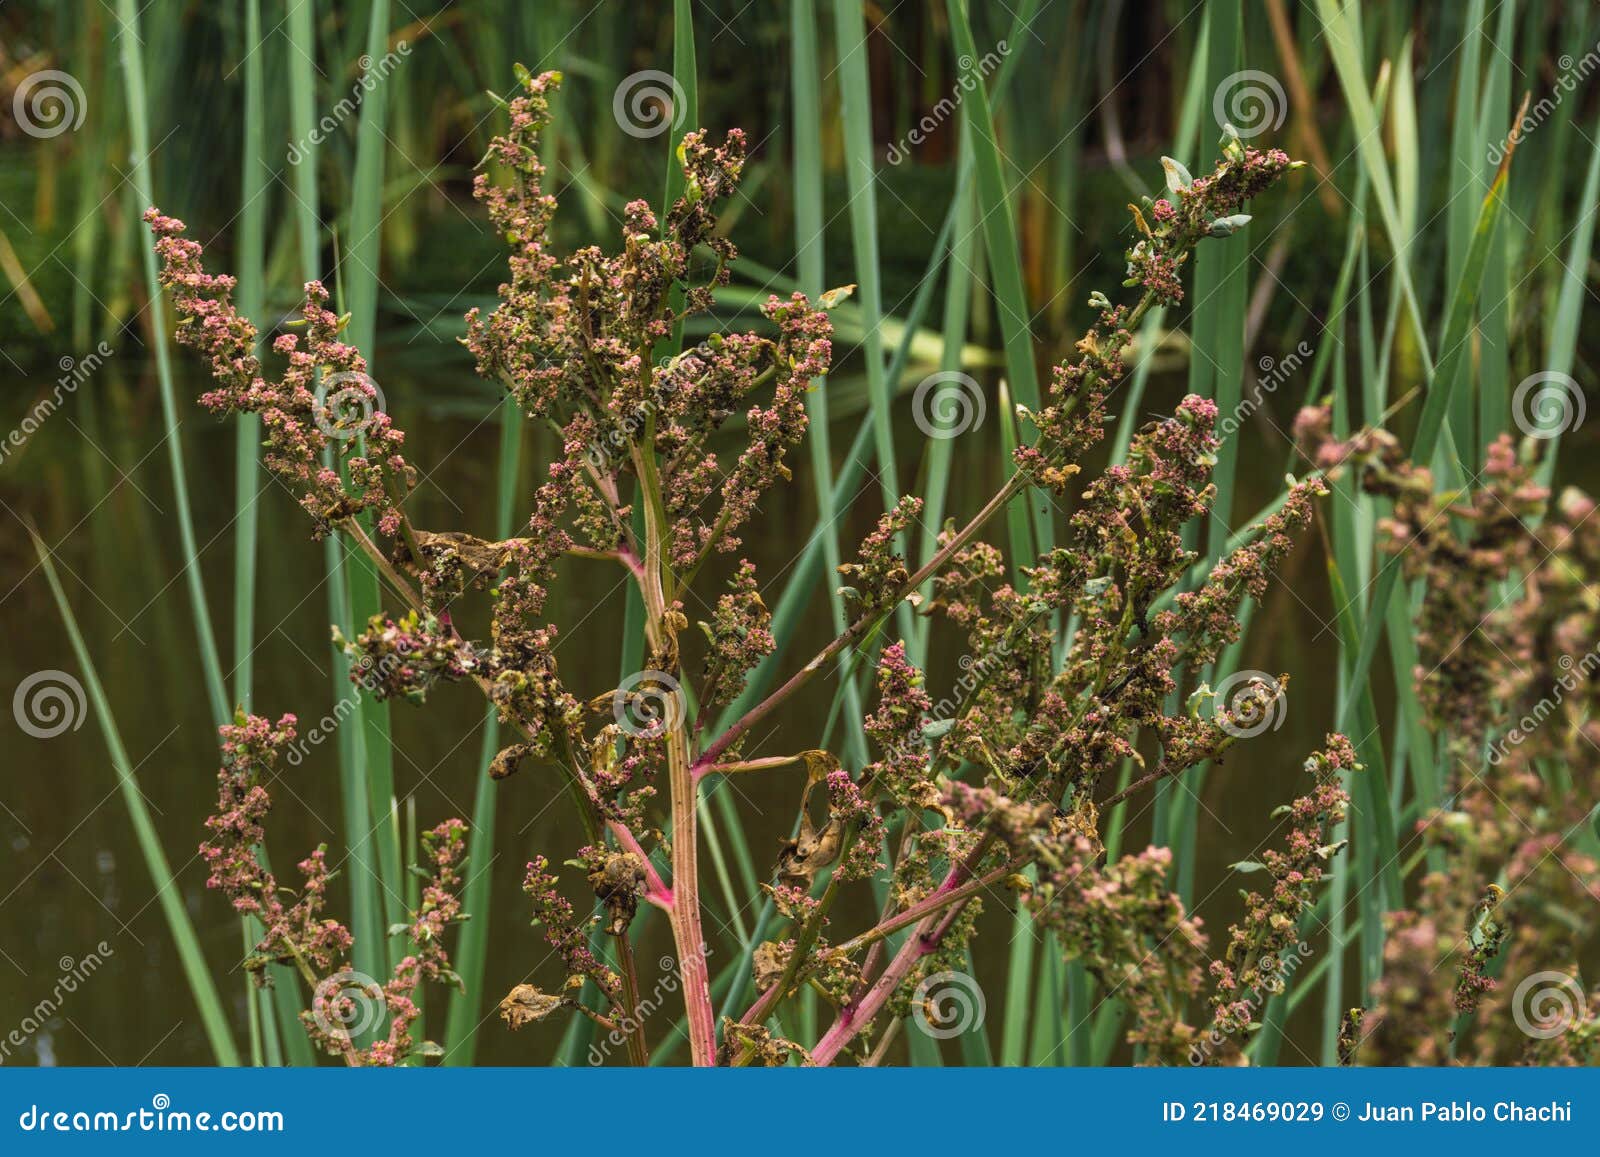 quinua silvestre plant